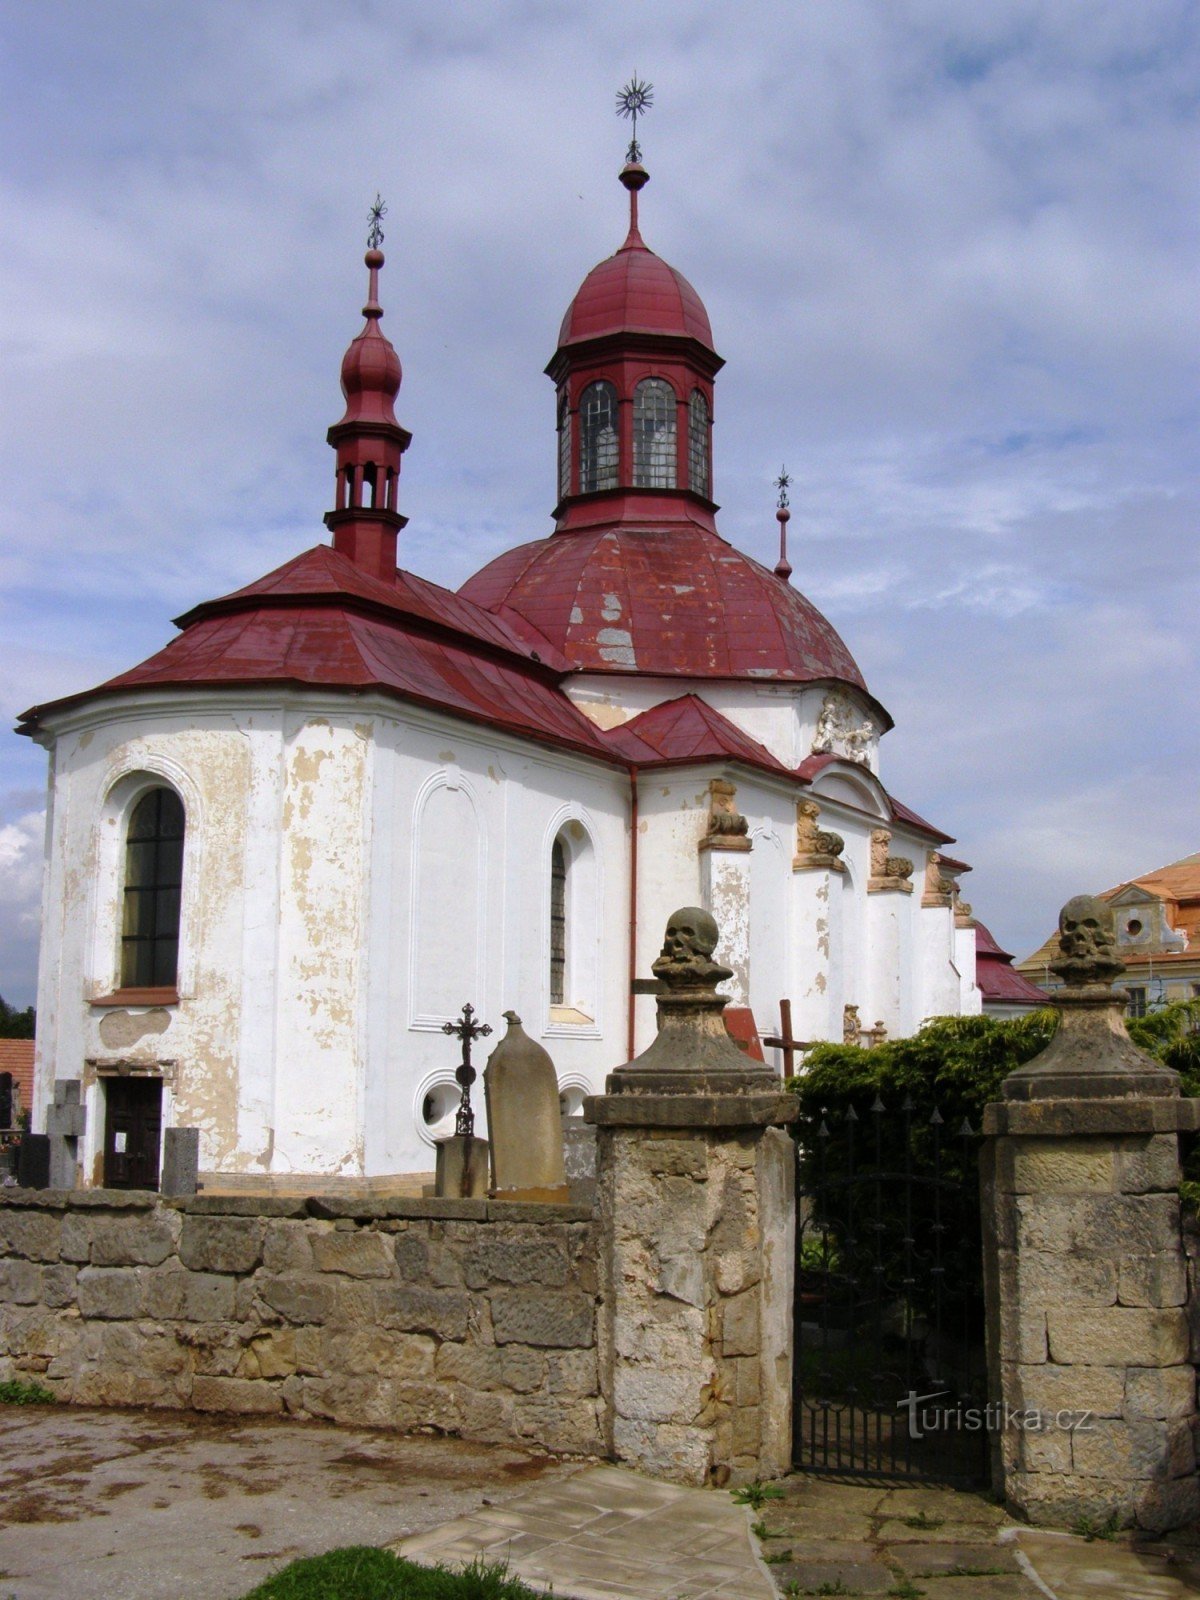 Slatiny - Church of the Assumption of the Virgin Mary